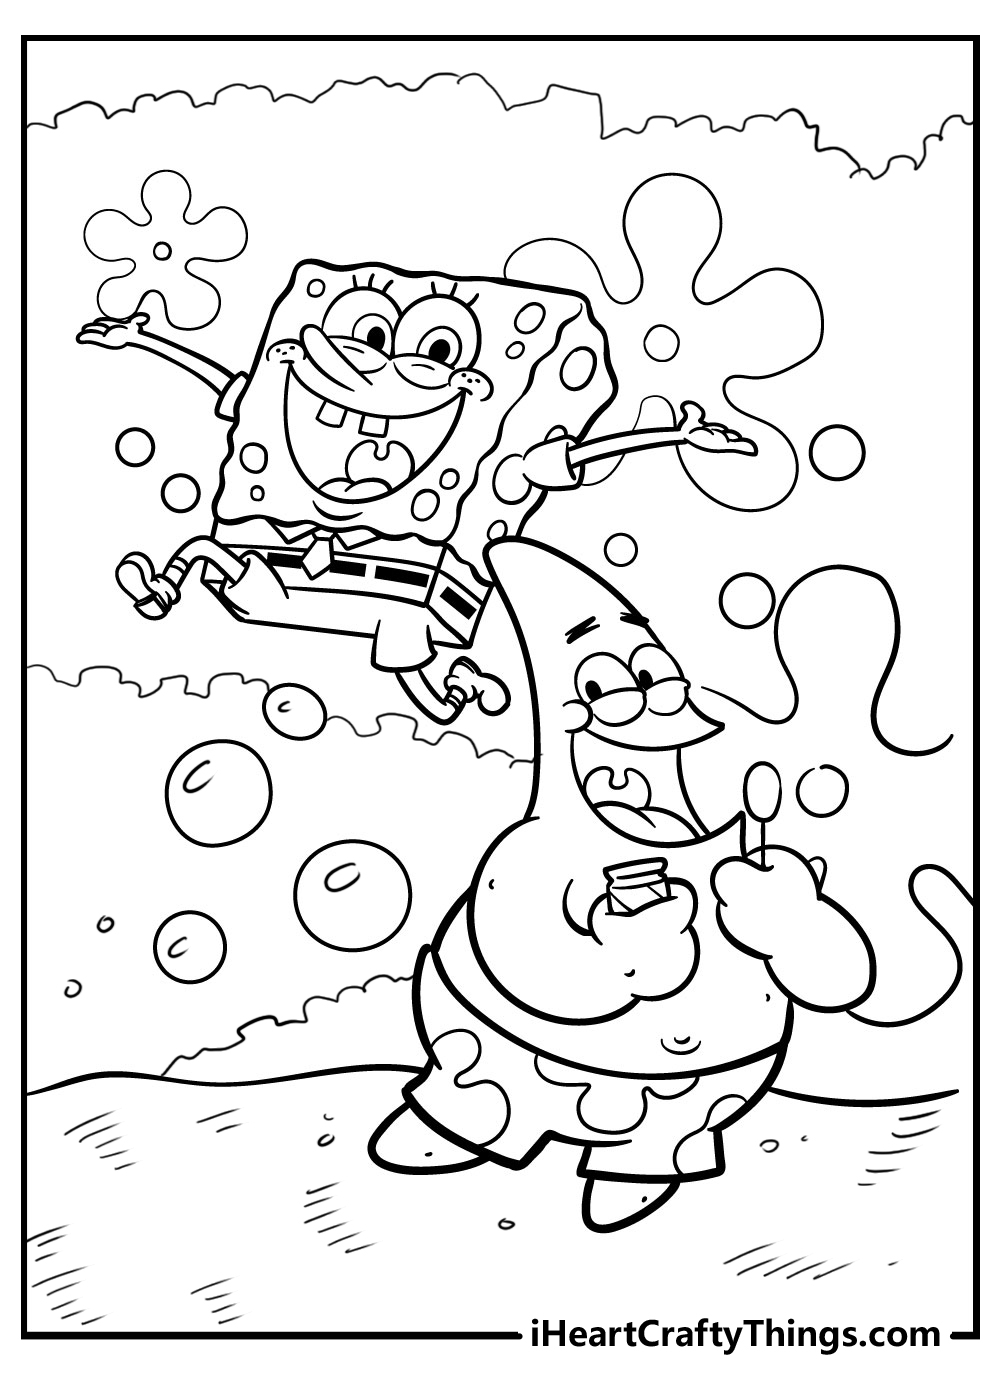 Spongebob Coloring Book: Great Gifts For Kids Who Love Spongebob